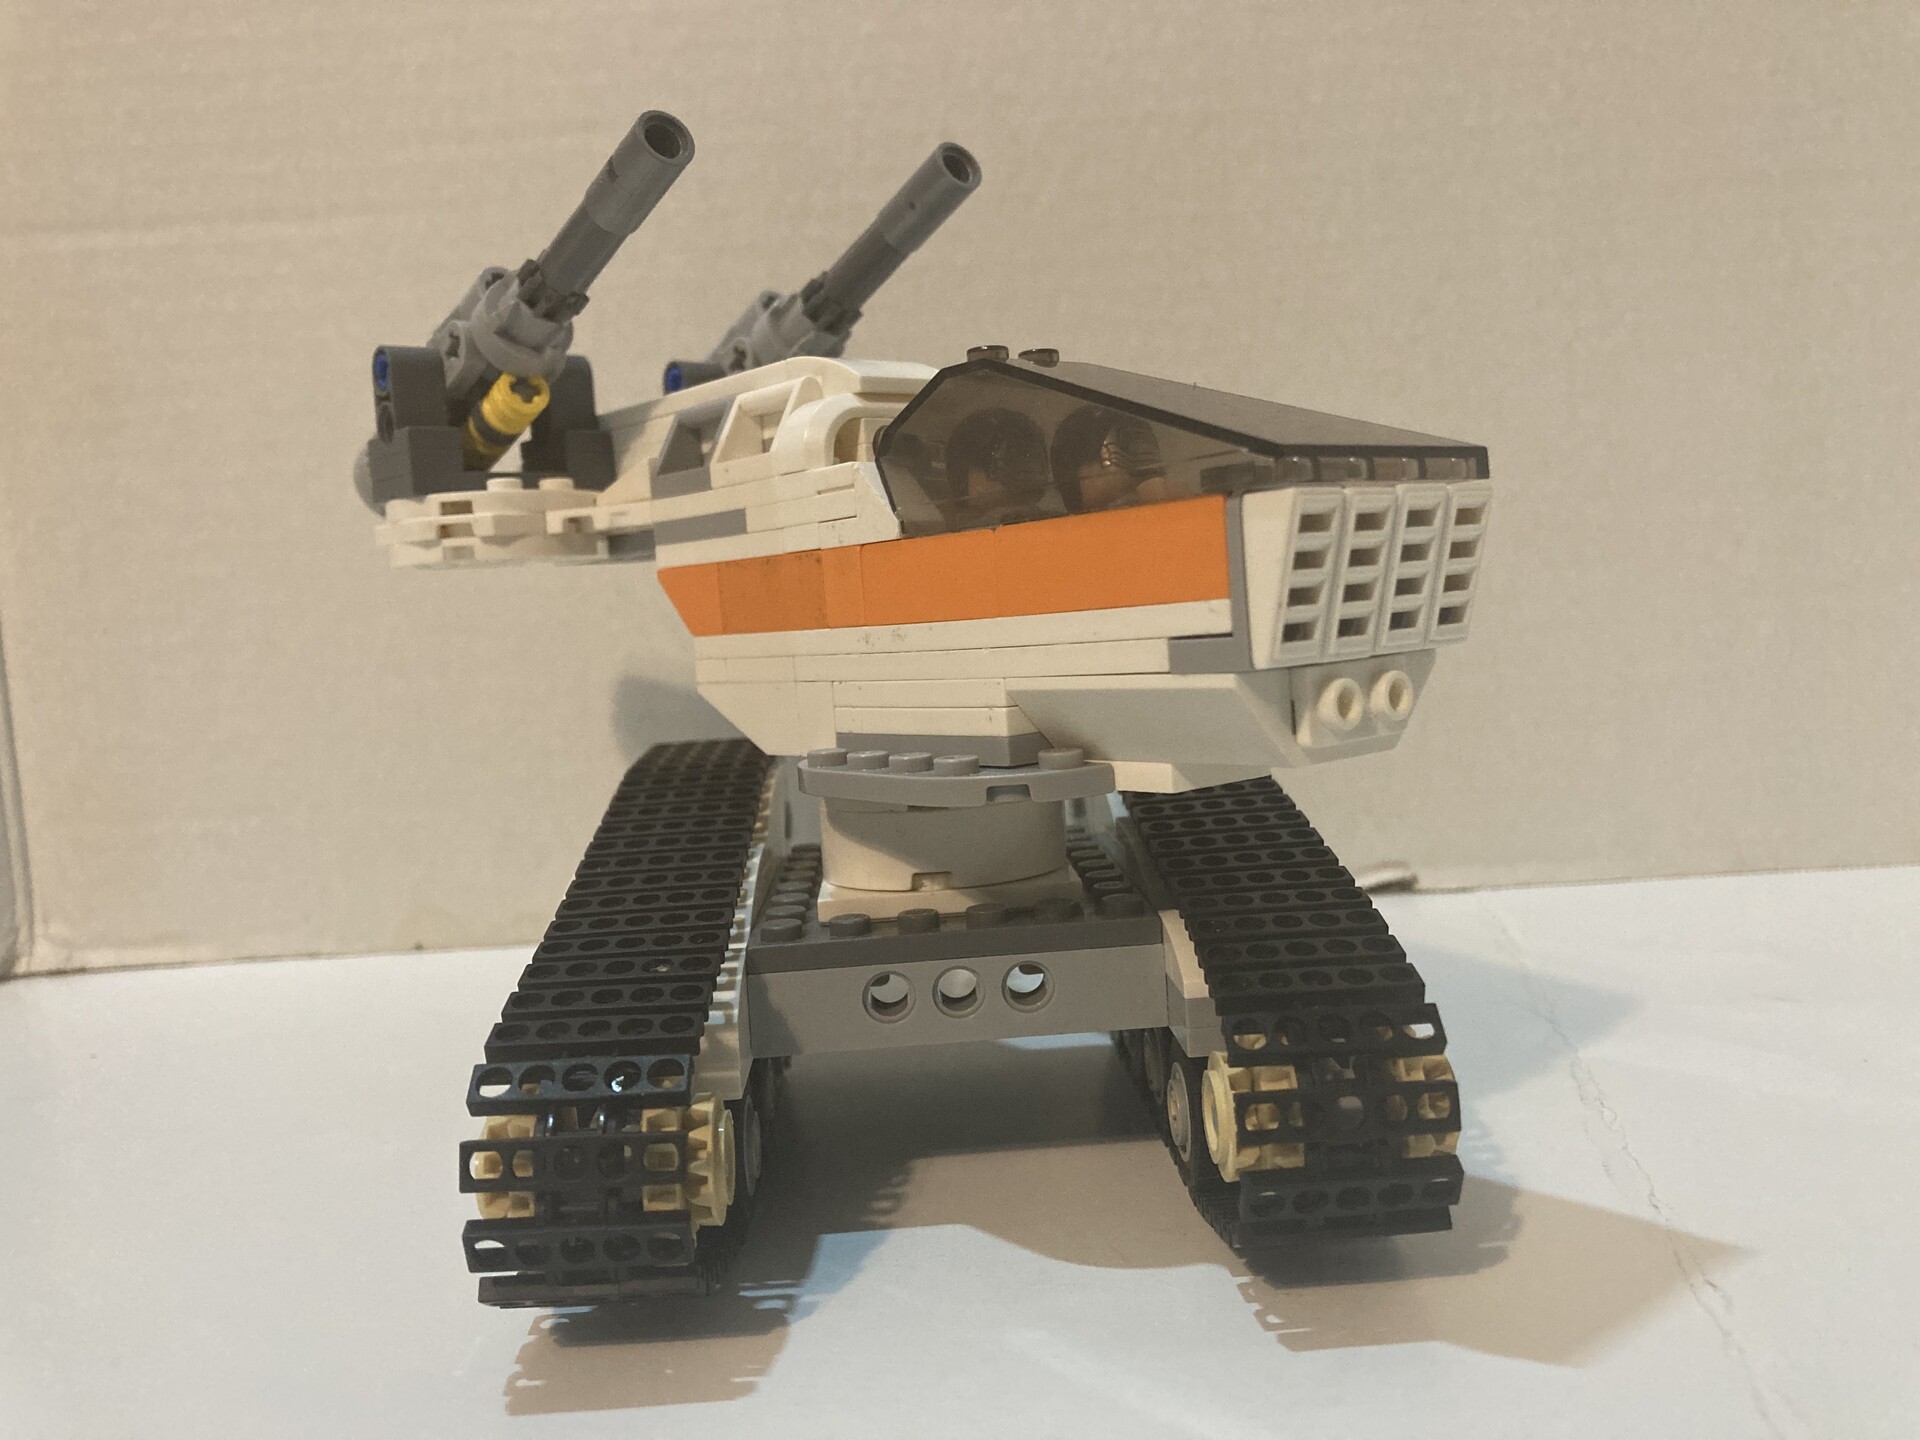 ArtStation - LEGO Tank WeDo 2.0